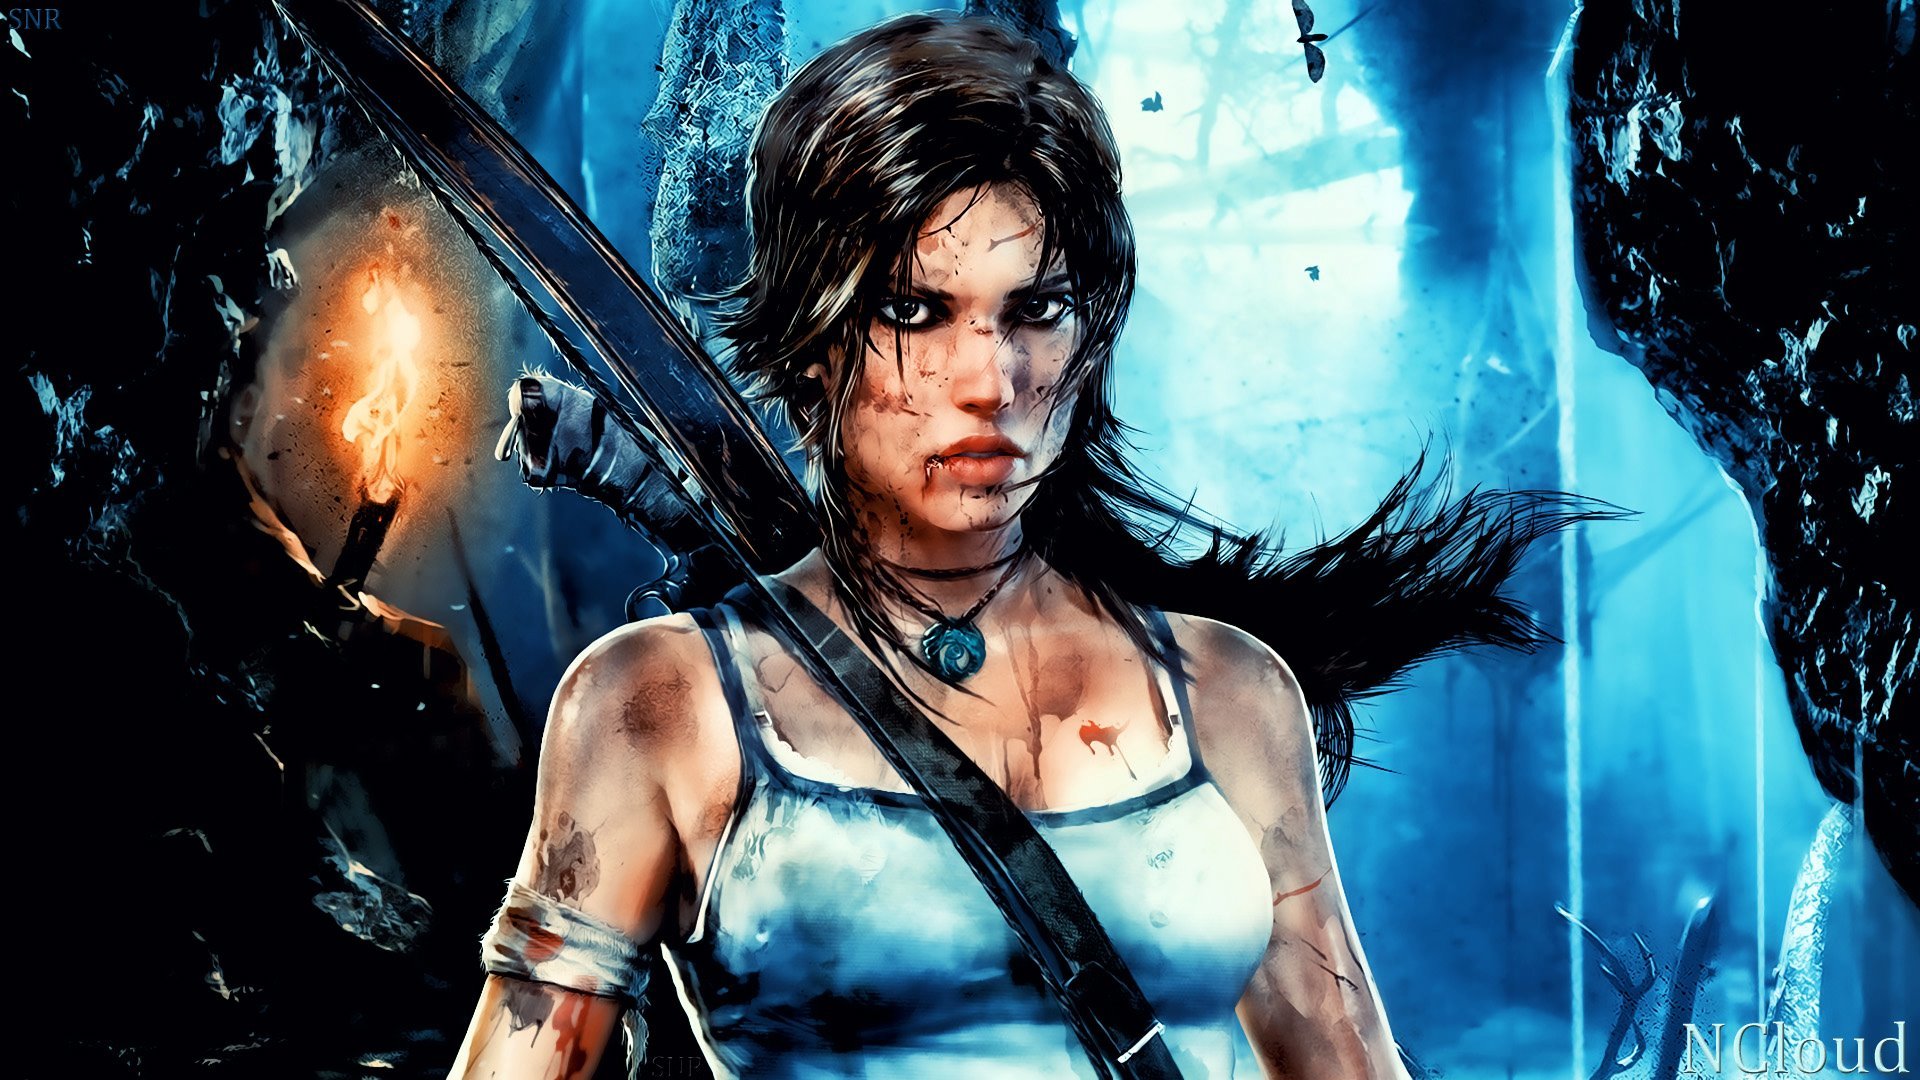 Best Tomb Raider (Lara Croft) wallpaper ID:436840 for High Resolution full hd 1080p desktop